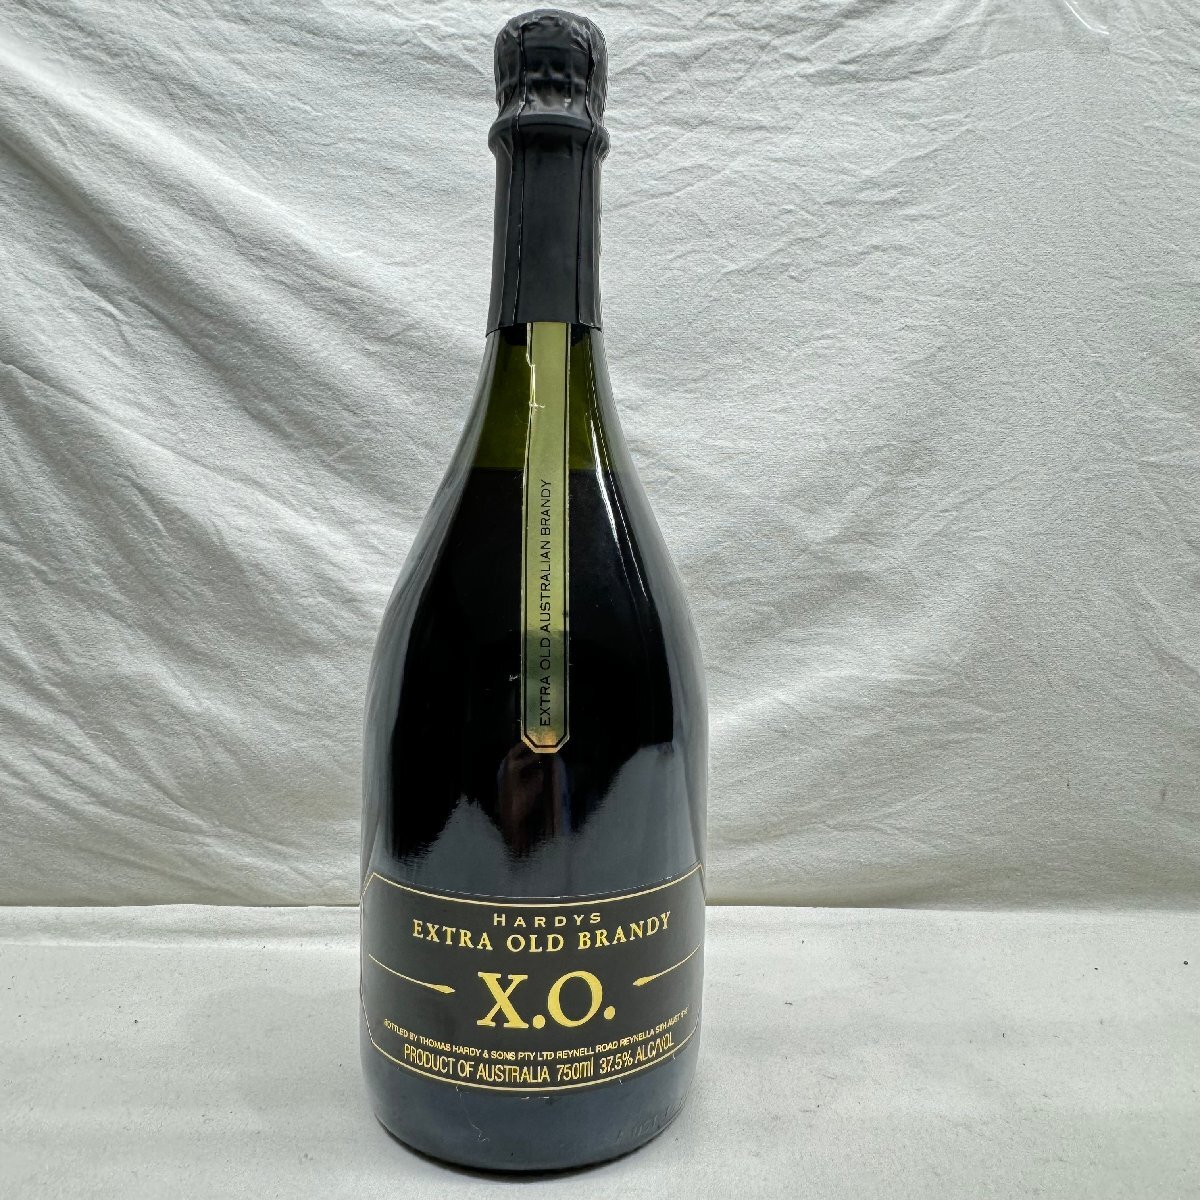 HARDYS EXTRA OLD BRANDY XO ハーディーズ エクストラオールド ブランデー X.O. 750ml 37.5% 未開封 古酒 の画像1